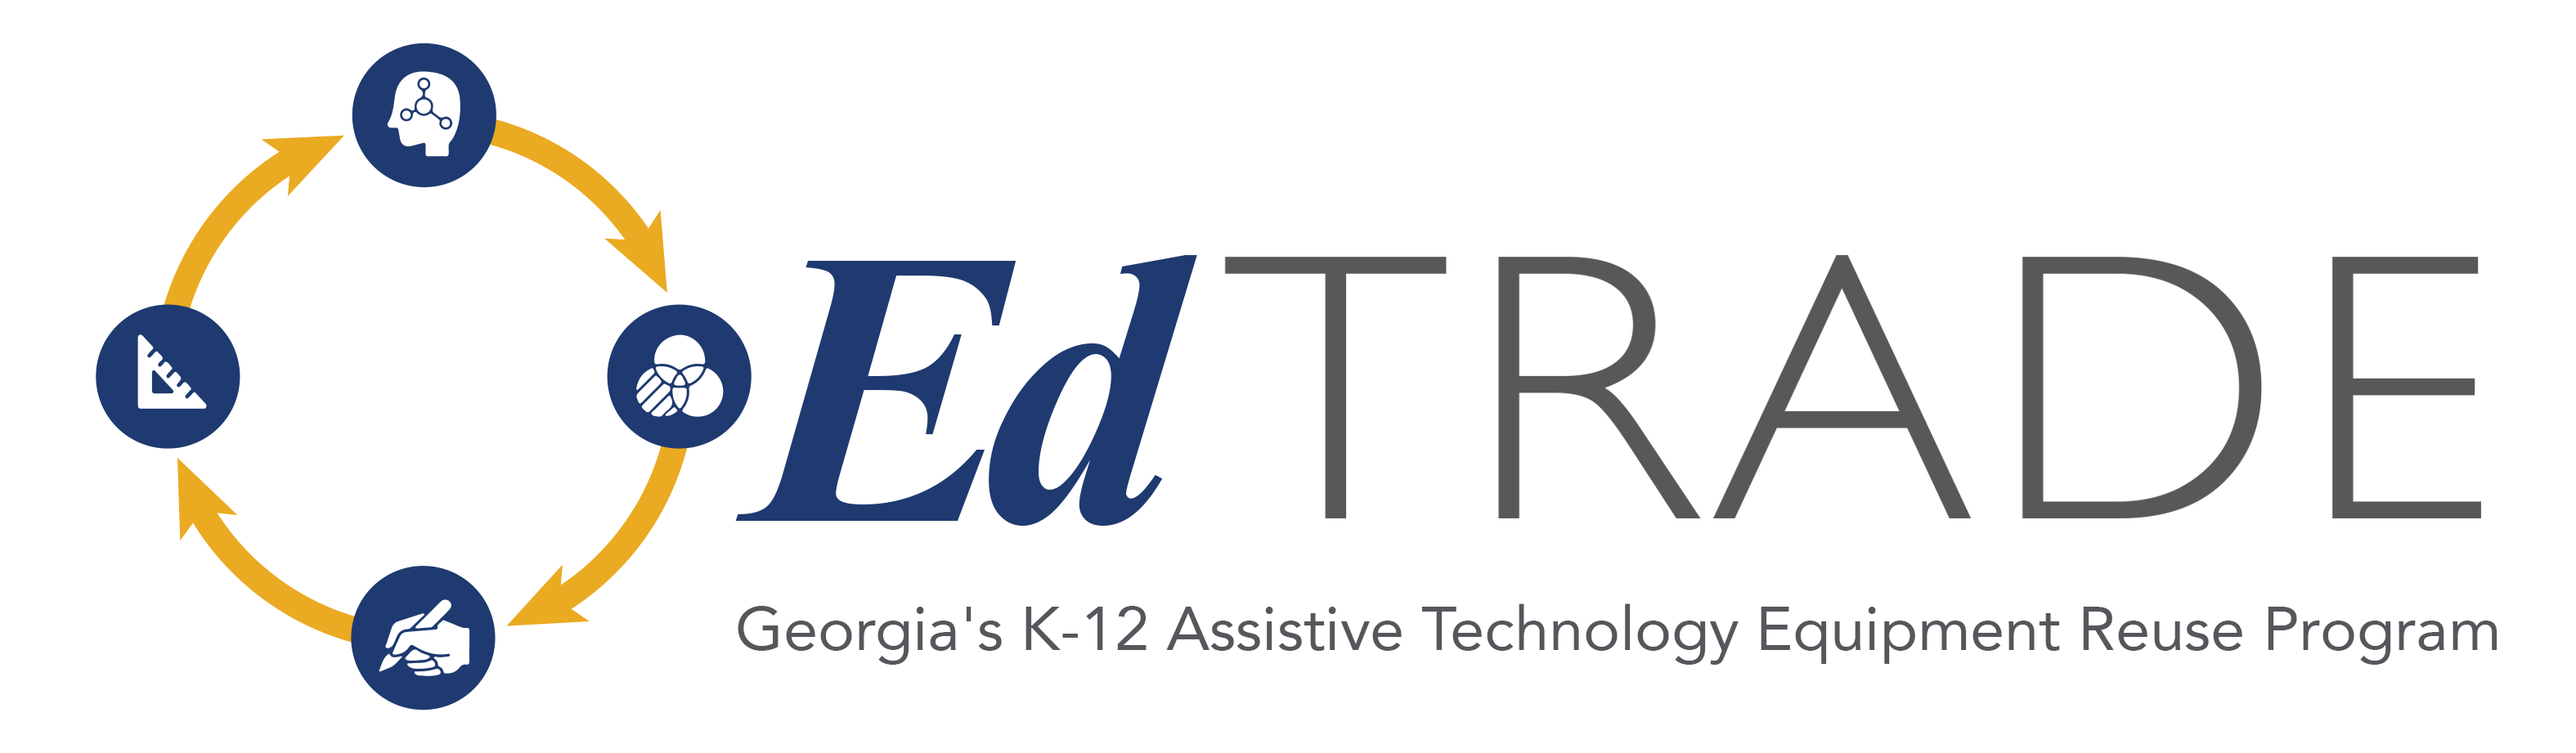 EdTrade - Georgia's K-12 Assistive Technology Reuse Program